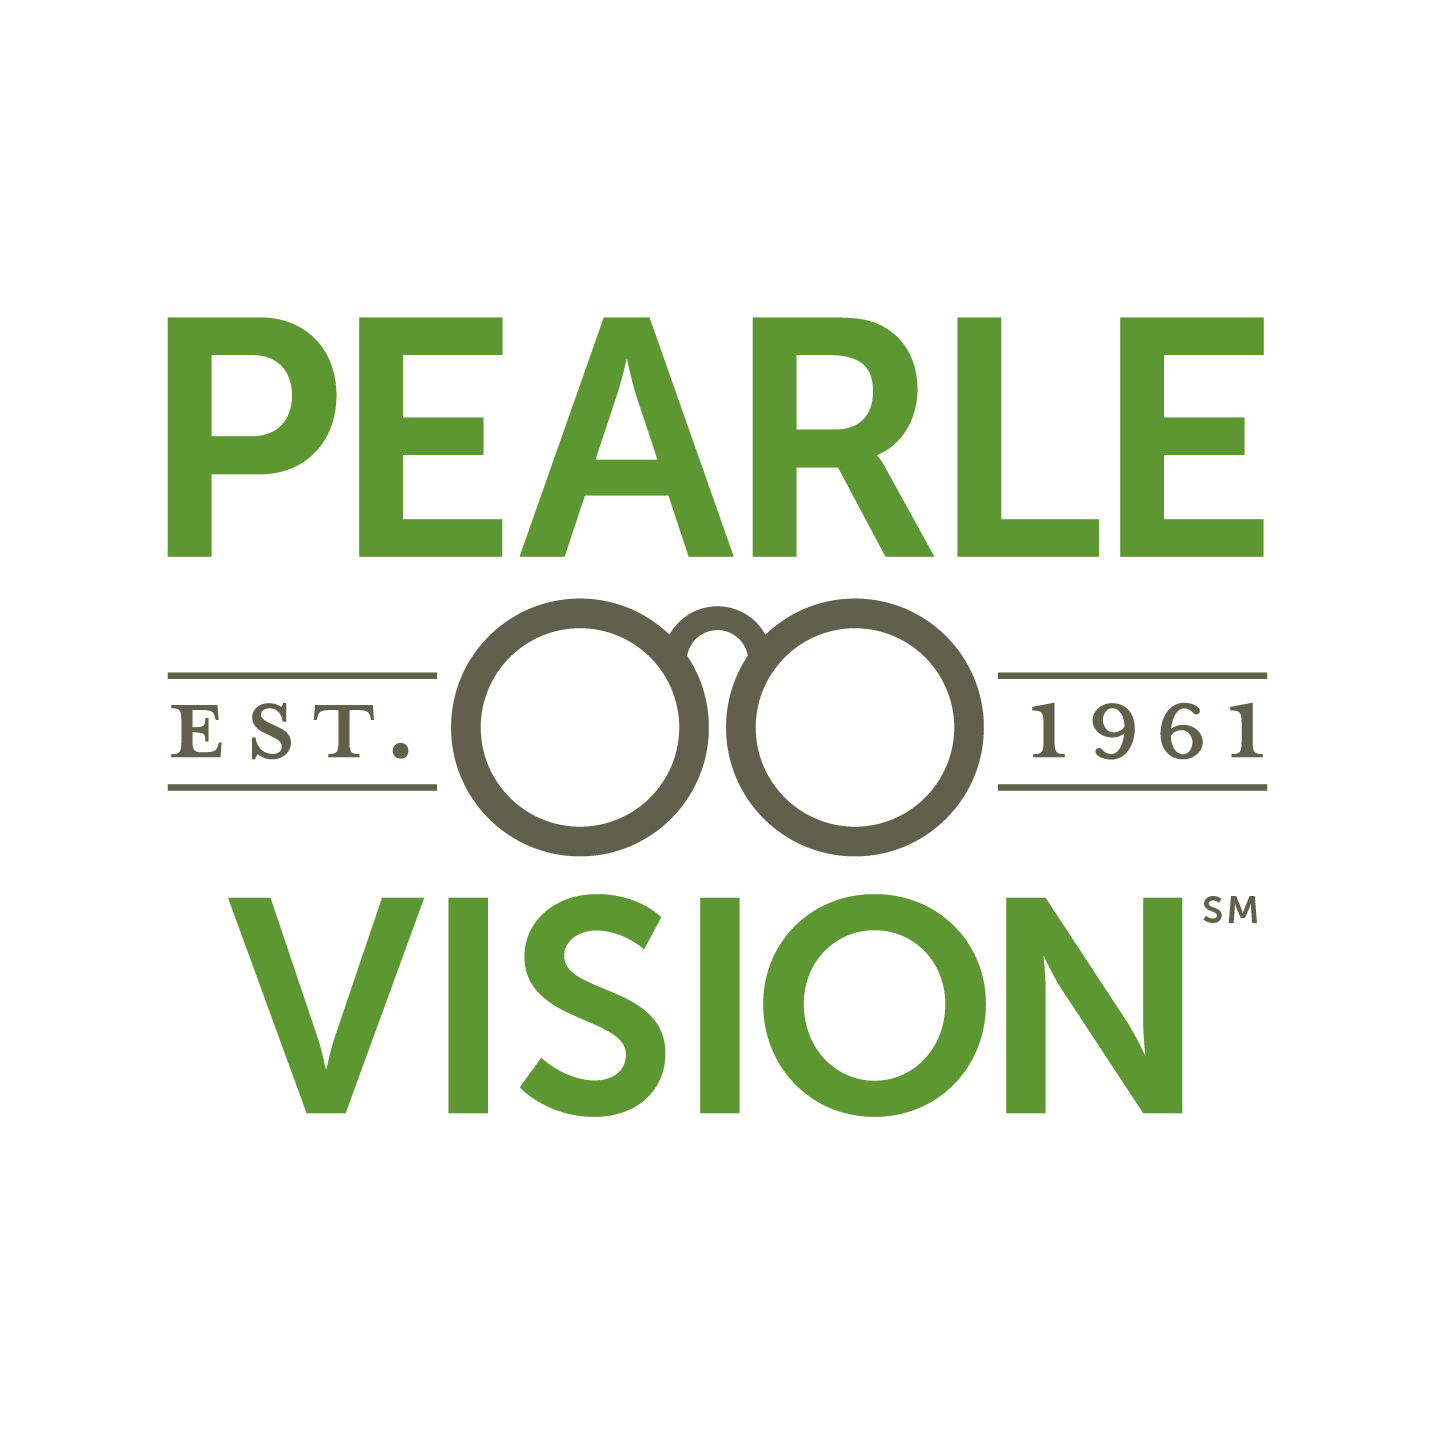 pearle-vision-eye-care-canada